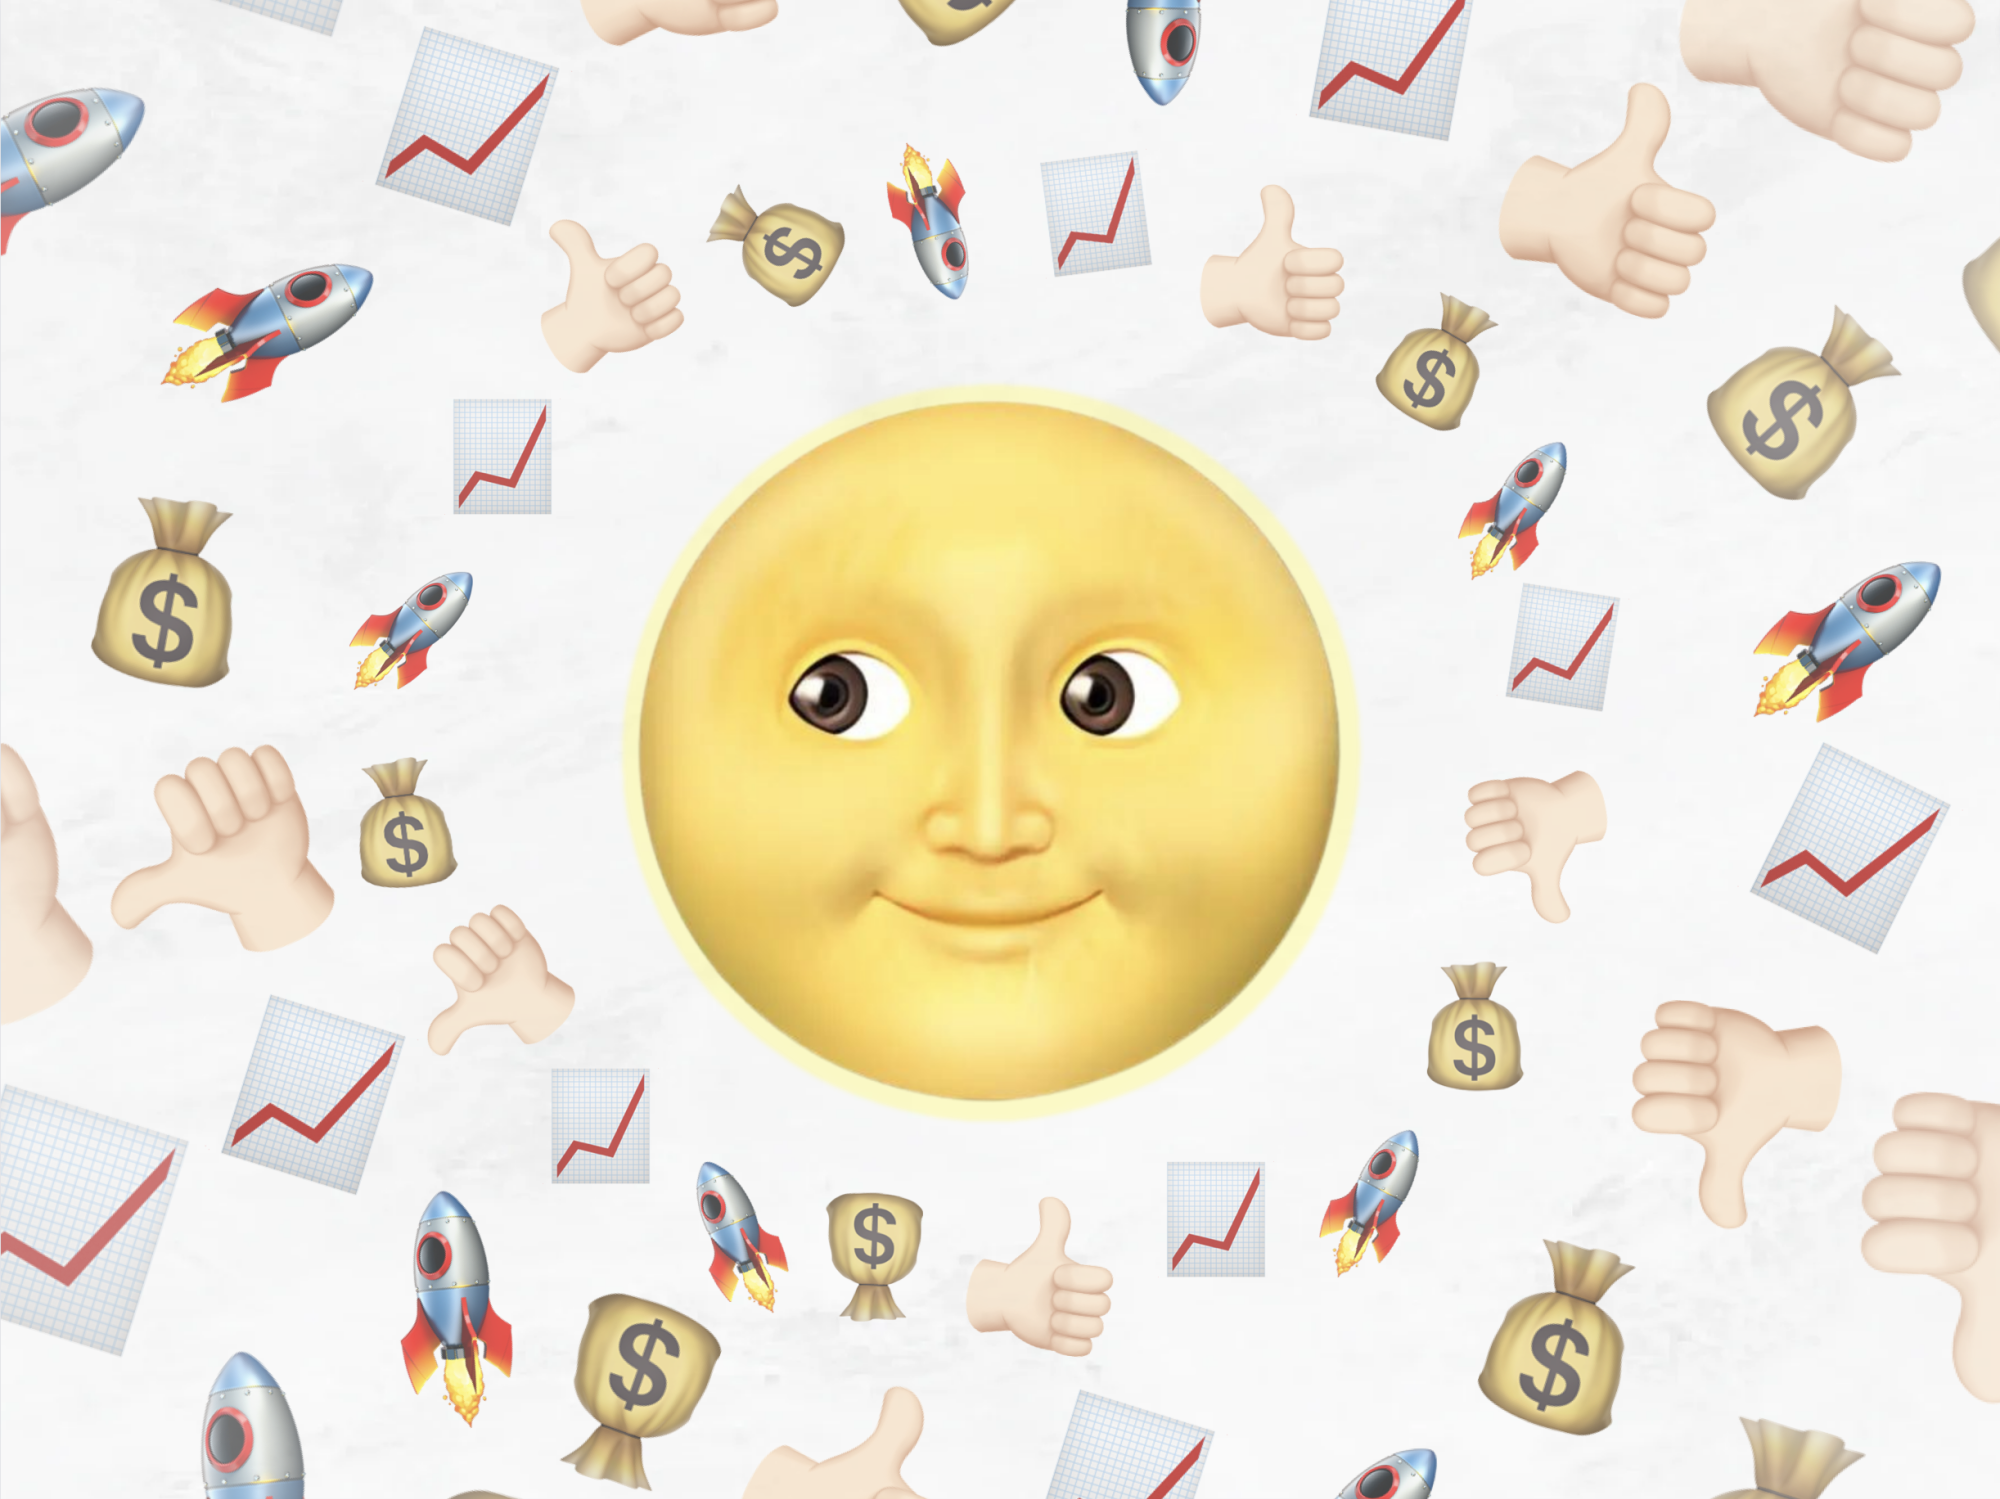 guess the emoji money